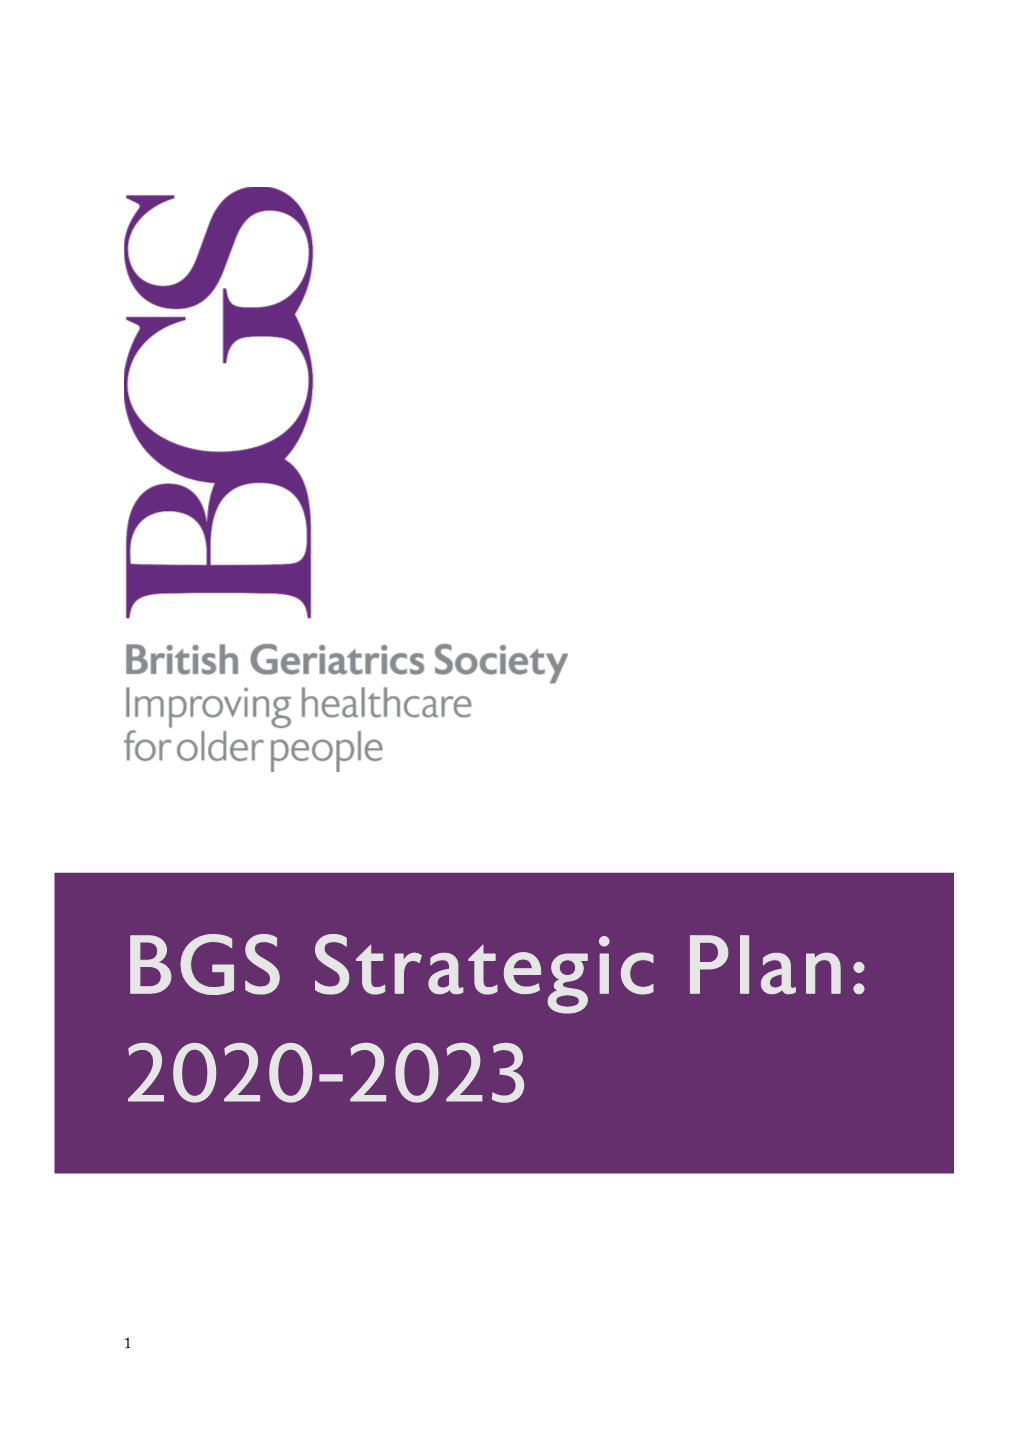 BGS Strategic Plan: 2020-2023